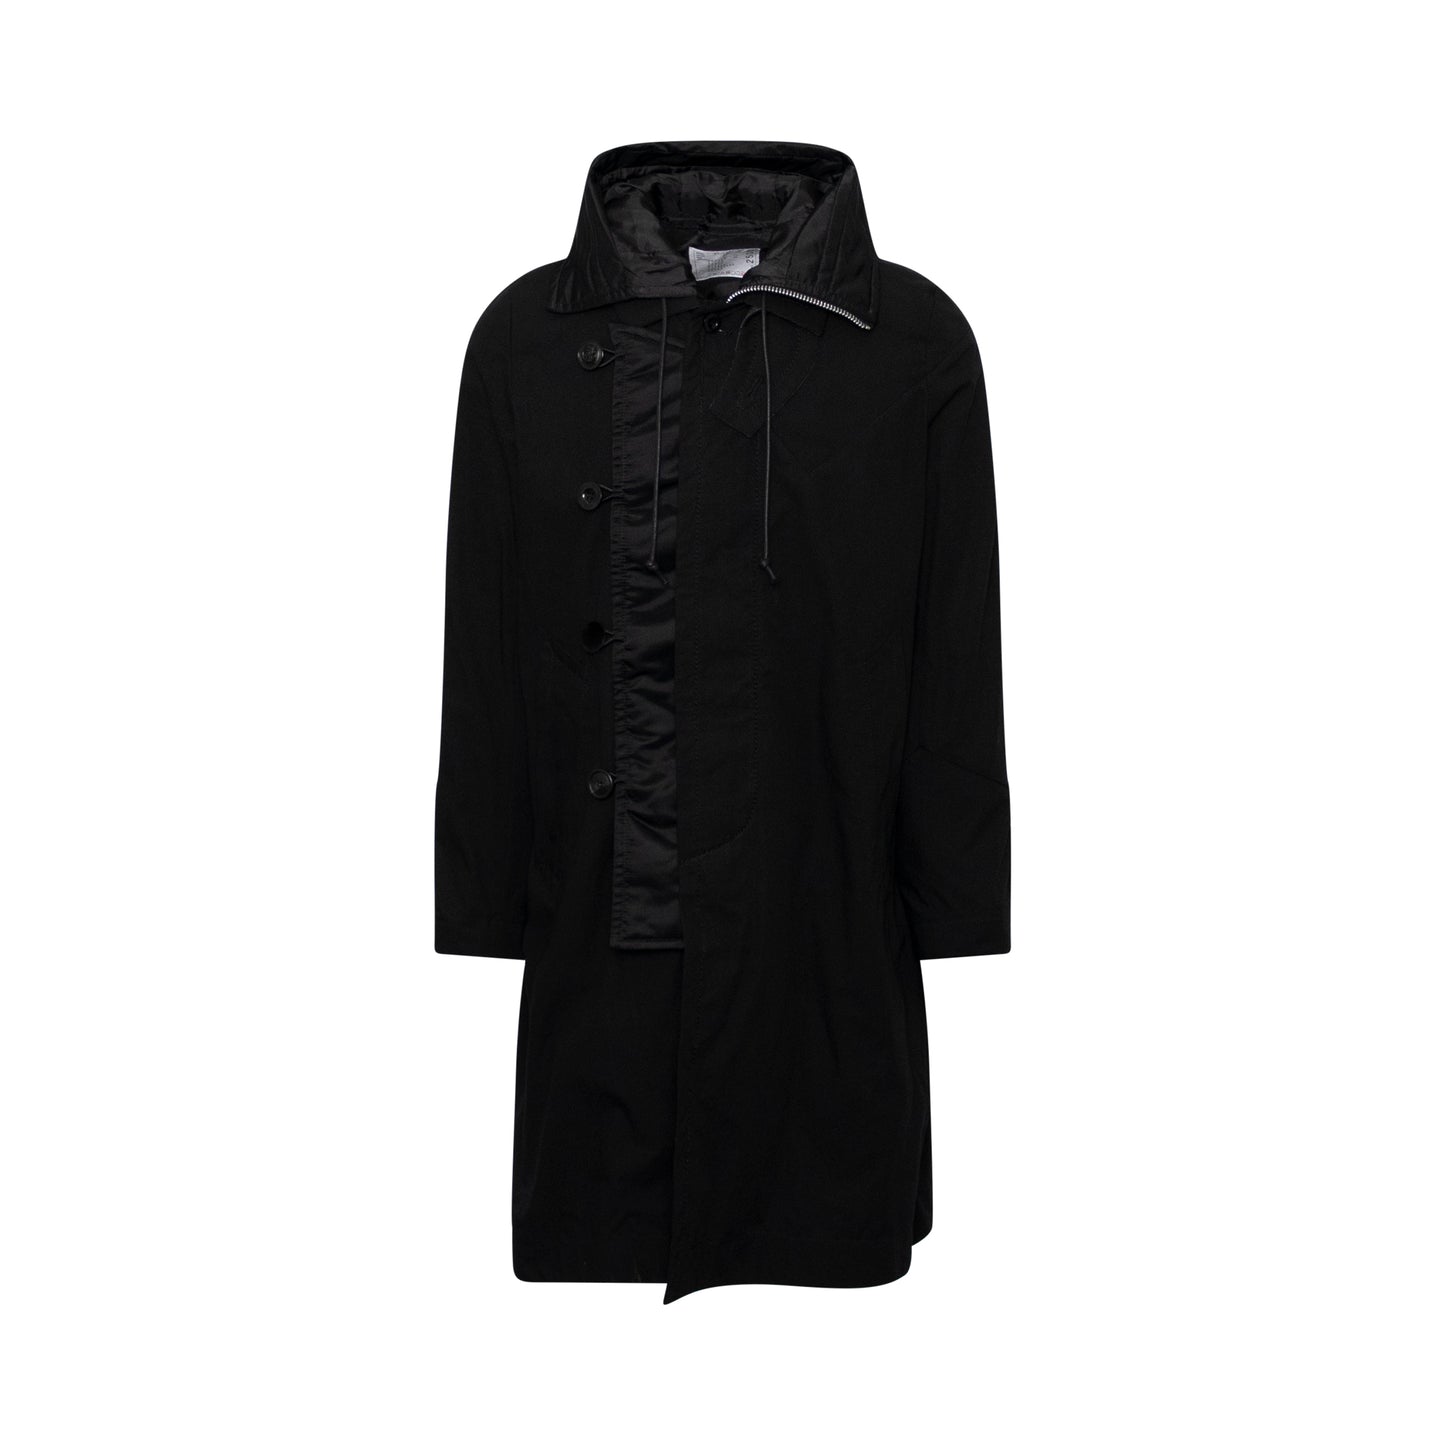 Cotton Nylon Oxford Coat in Black